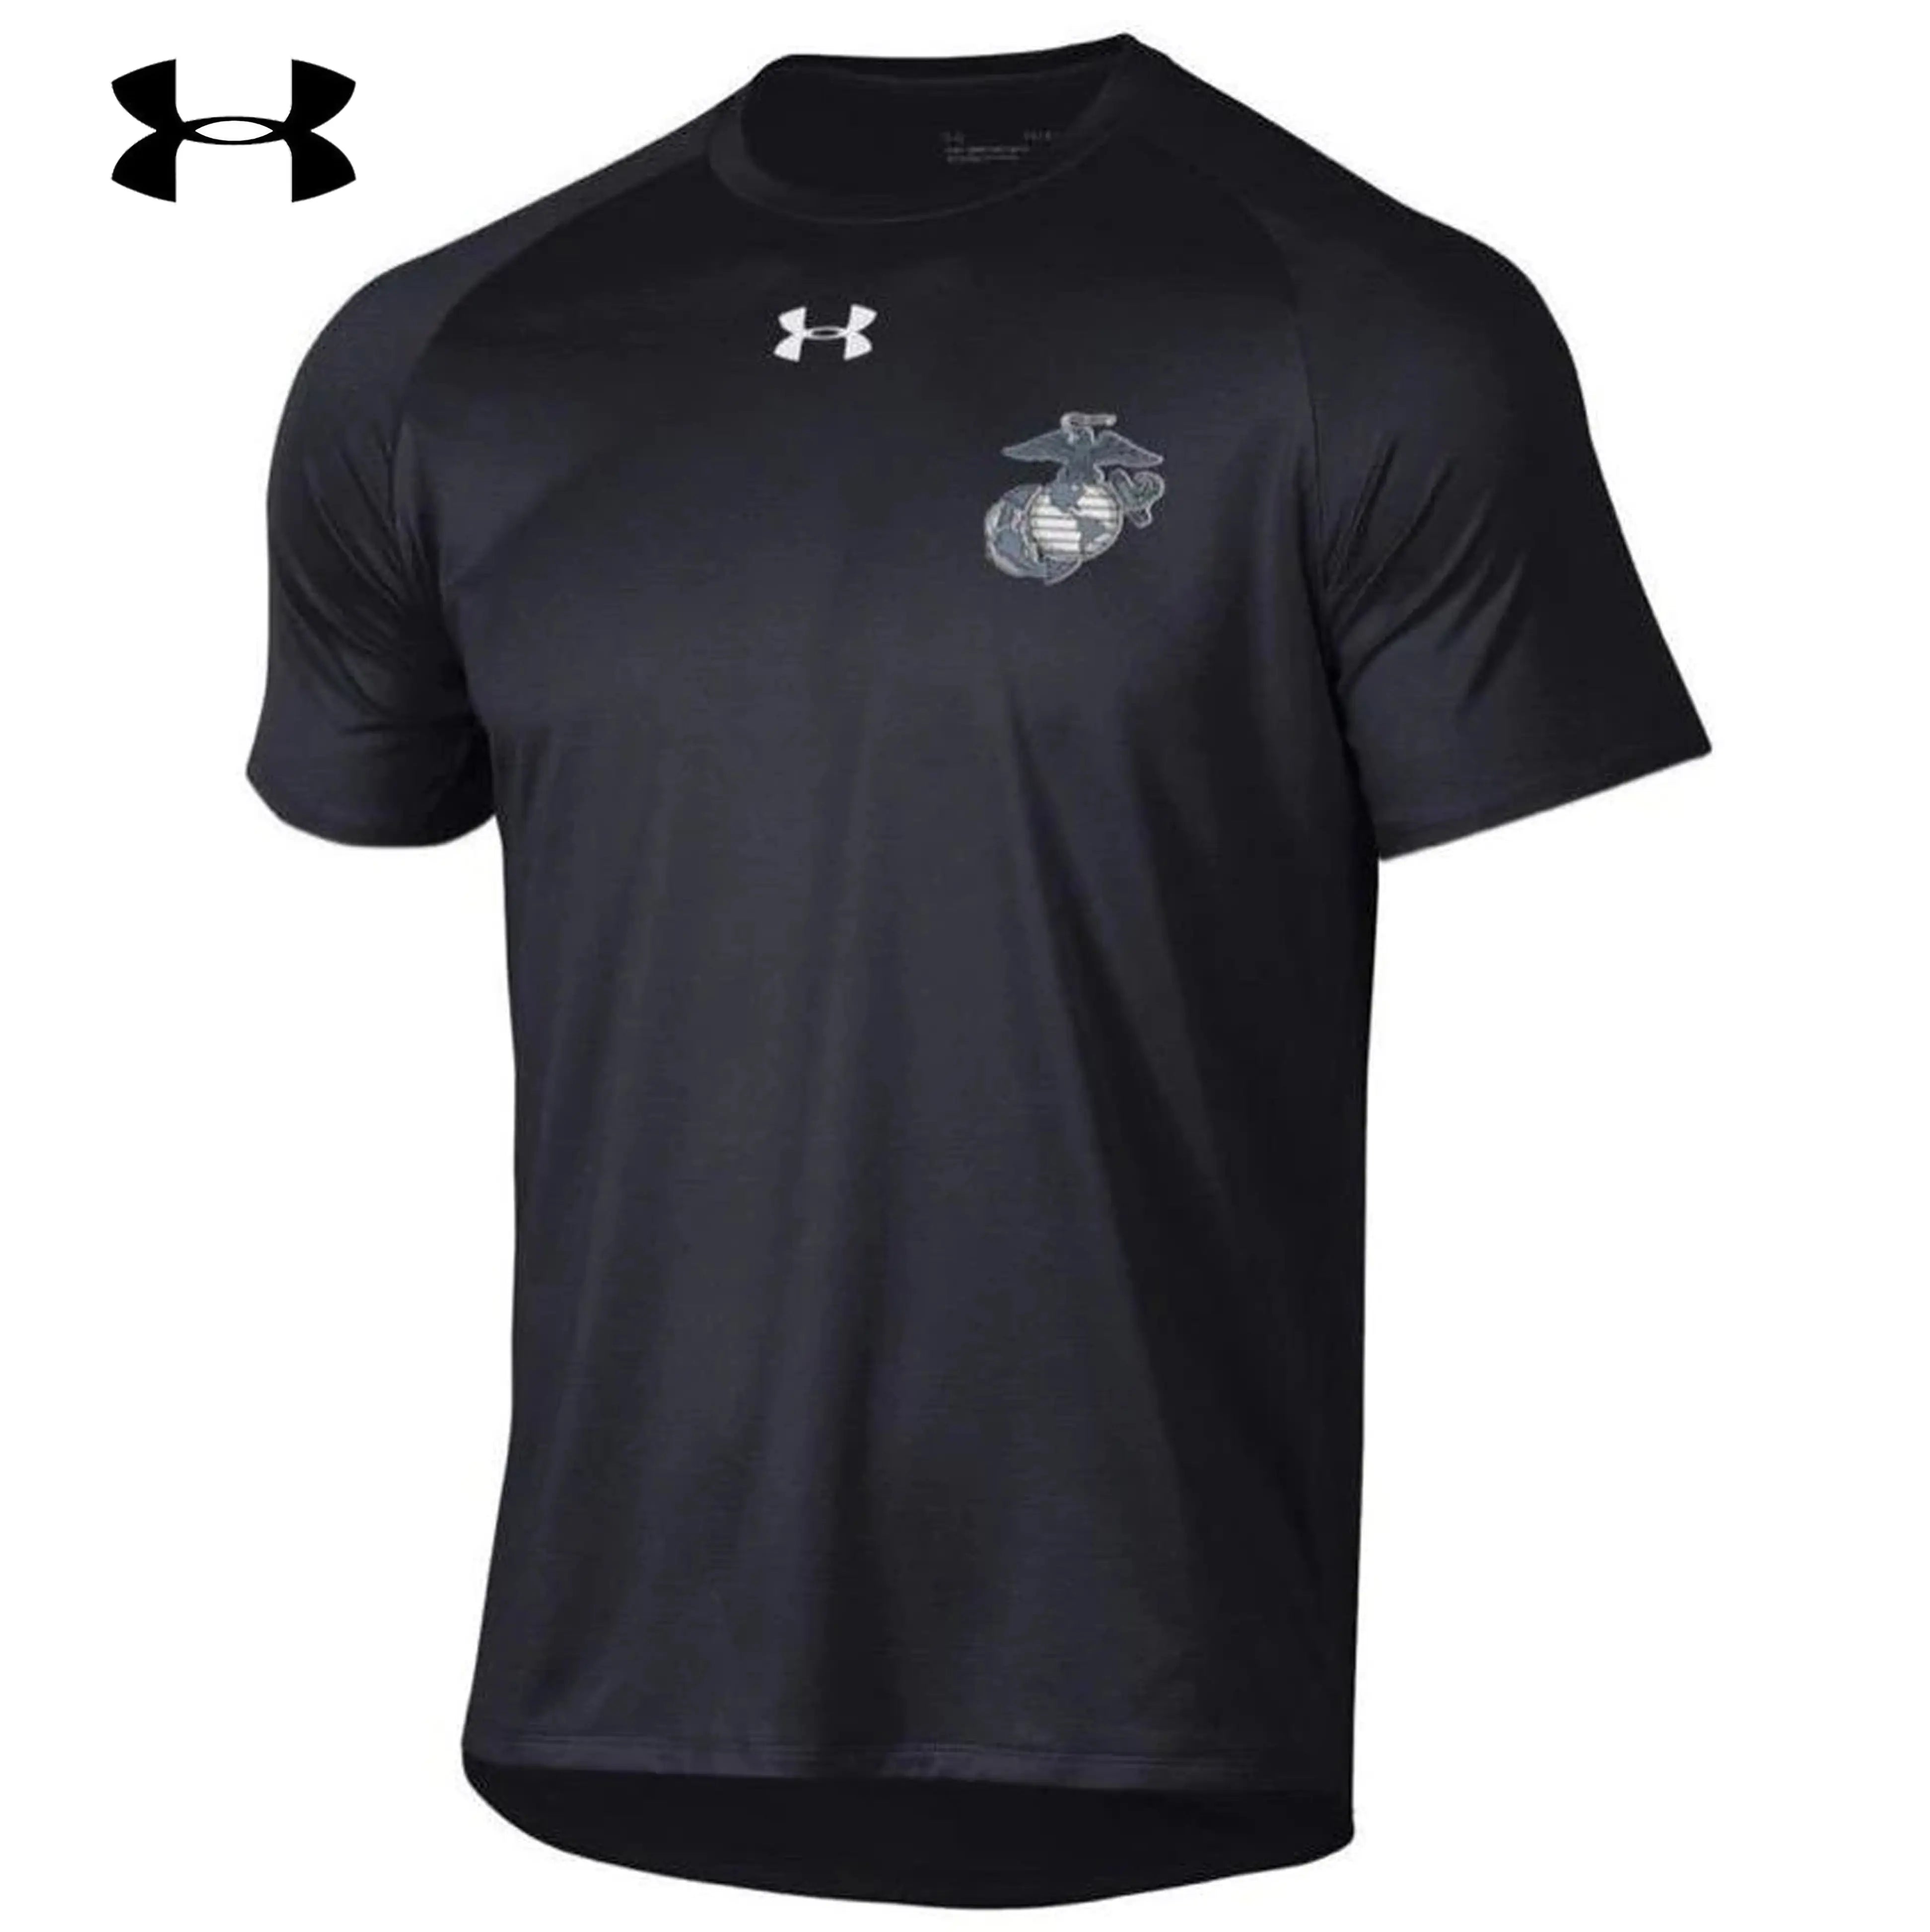 USMC T-Shirt - Performance Tee